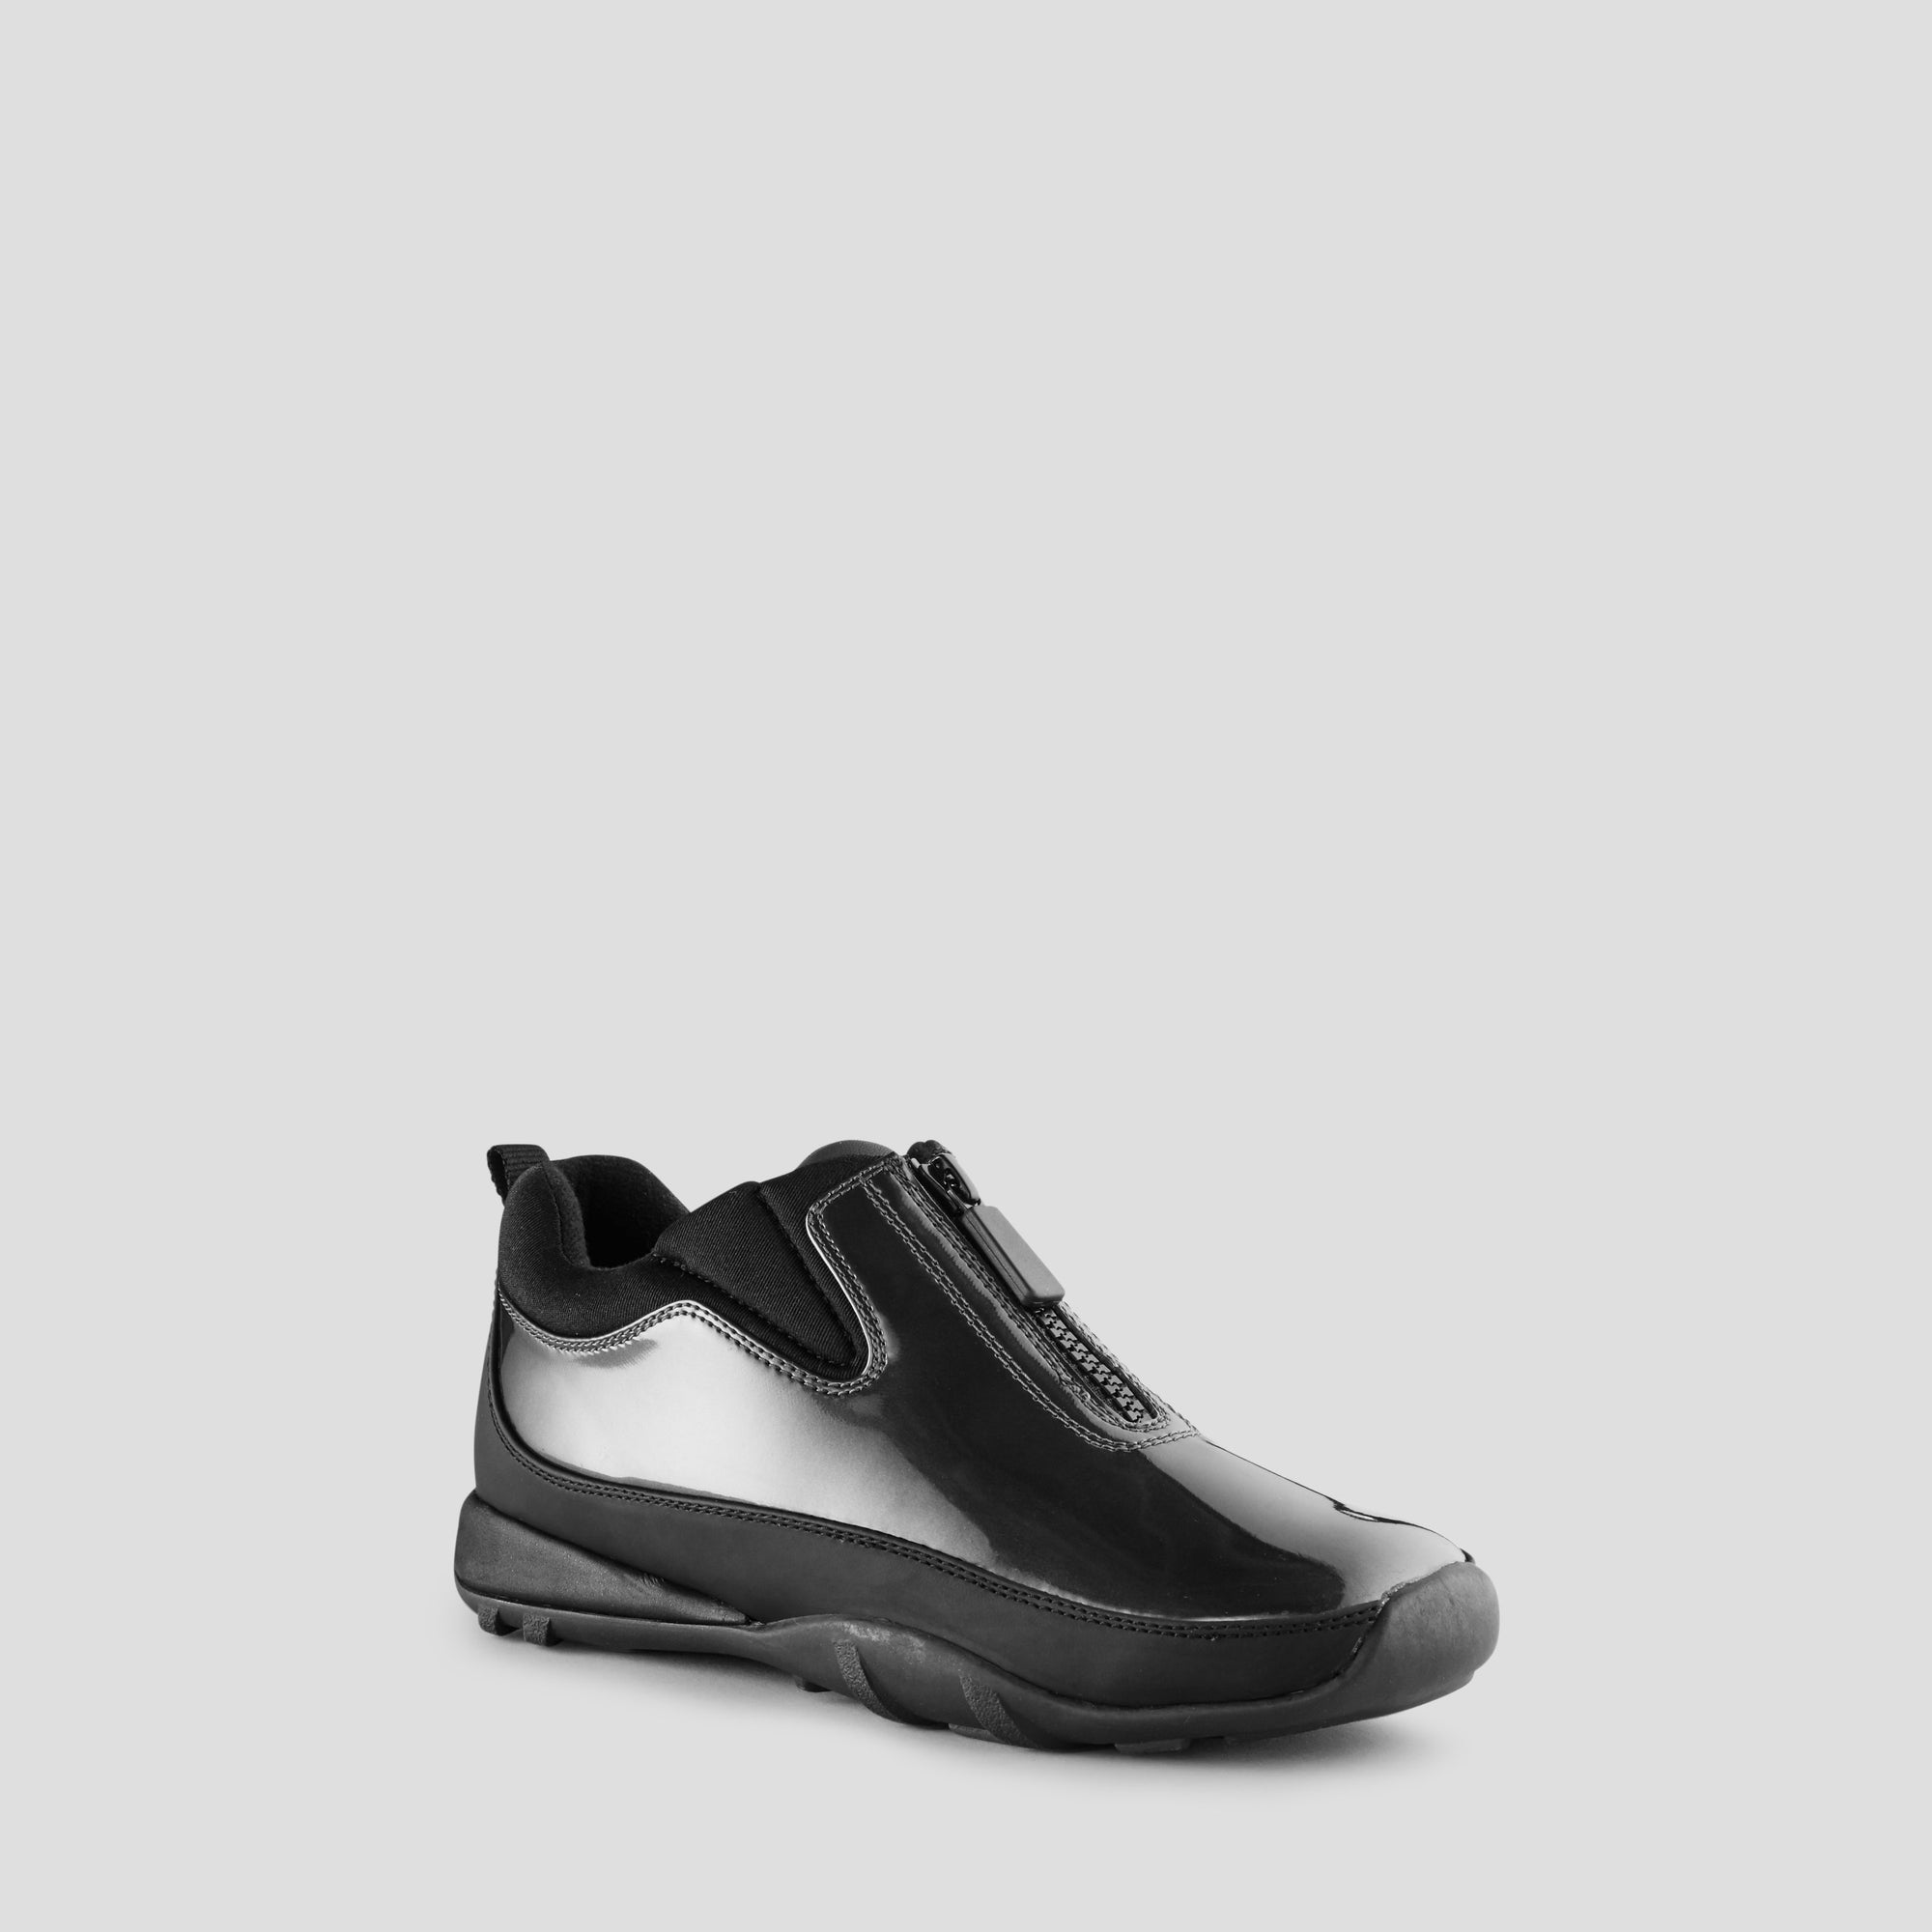 Howdoo Patent Rain Shoe - Colour Charcoal